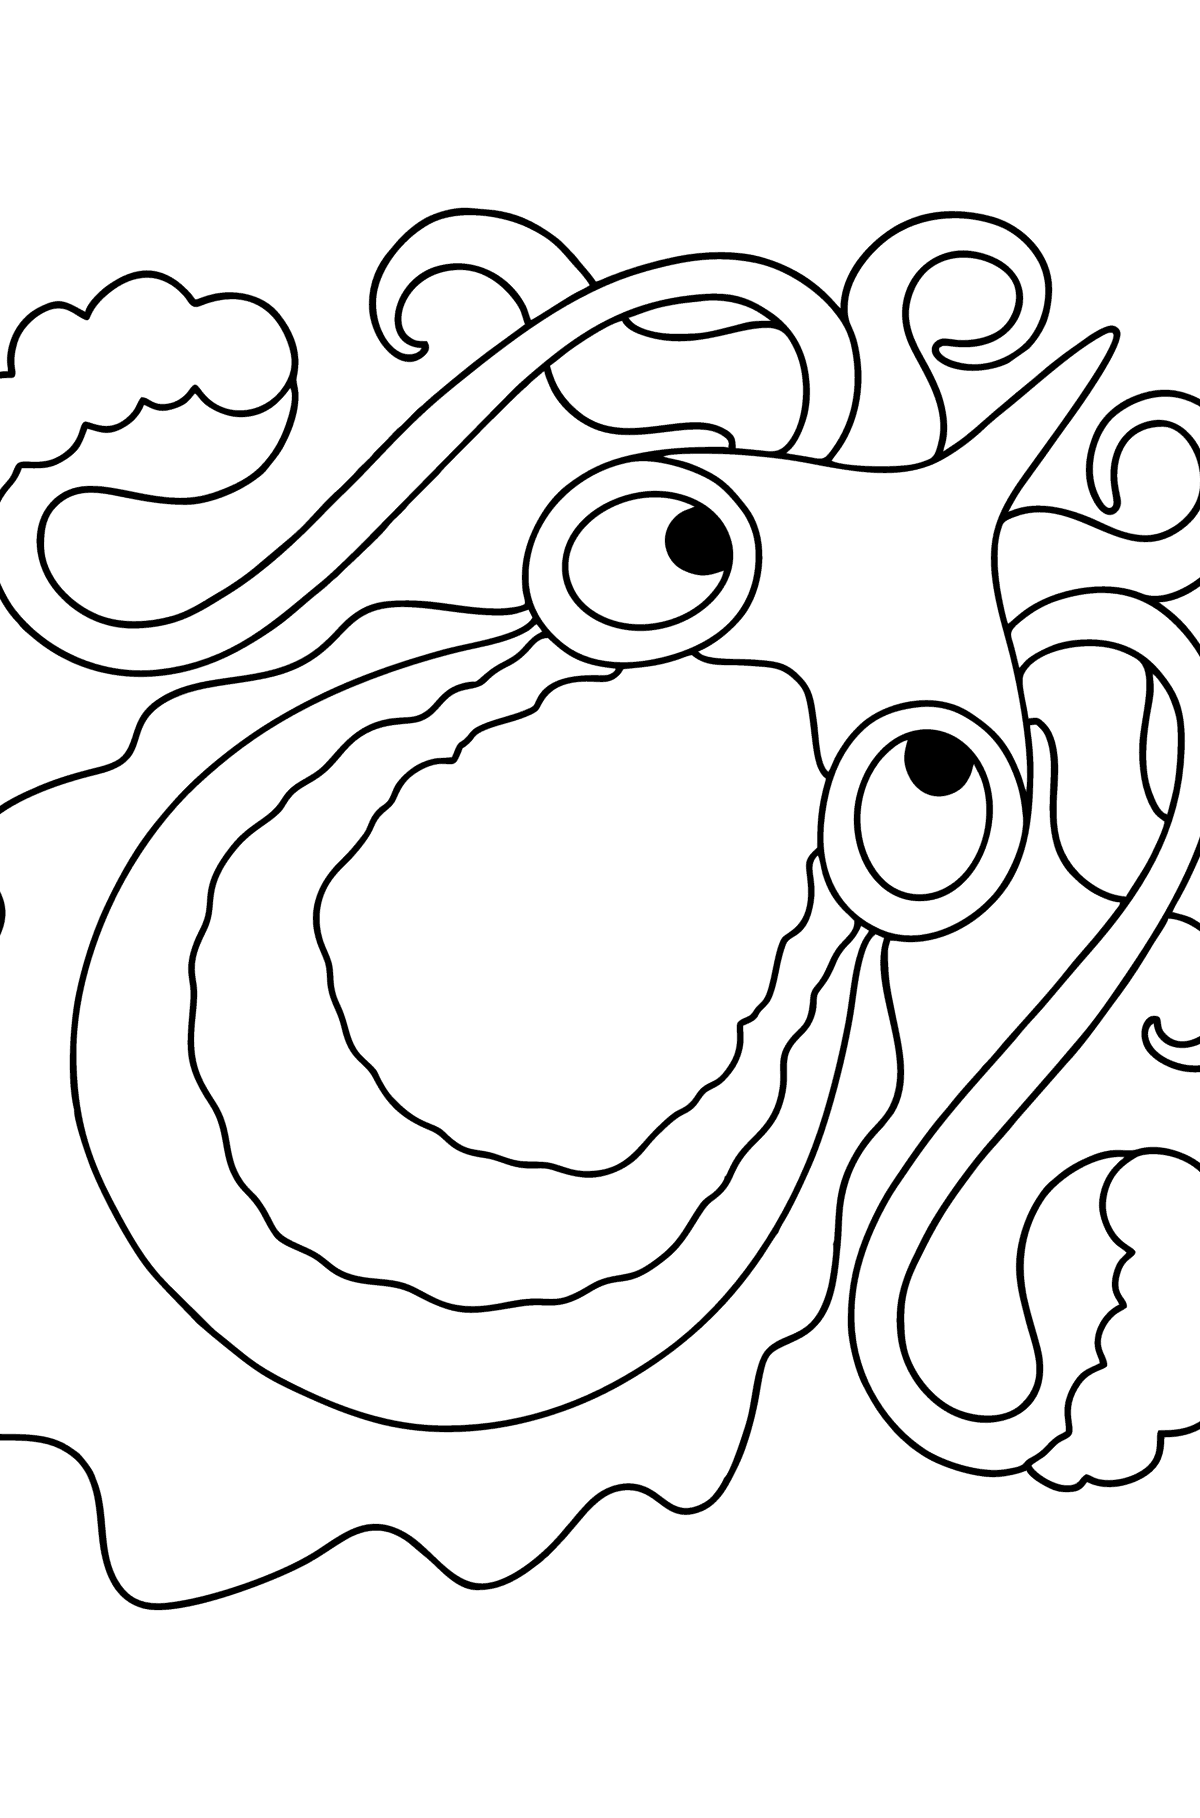 Раскраска Каракатица - Картинки для Детей